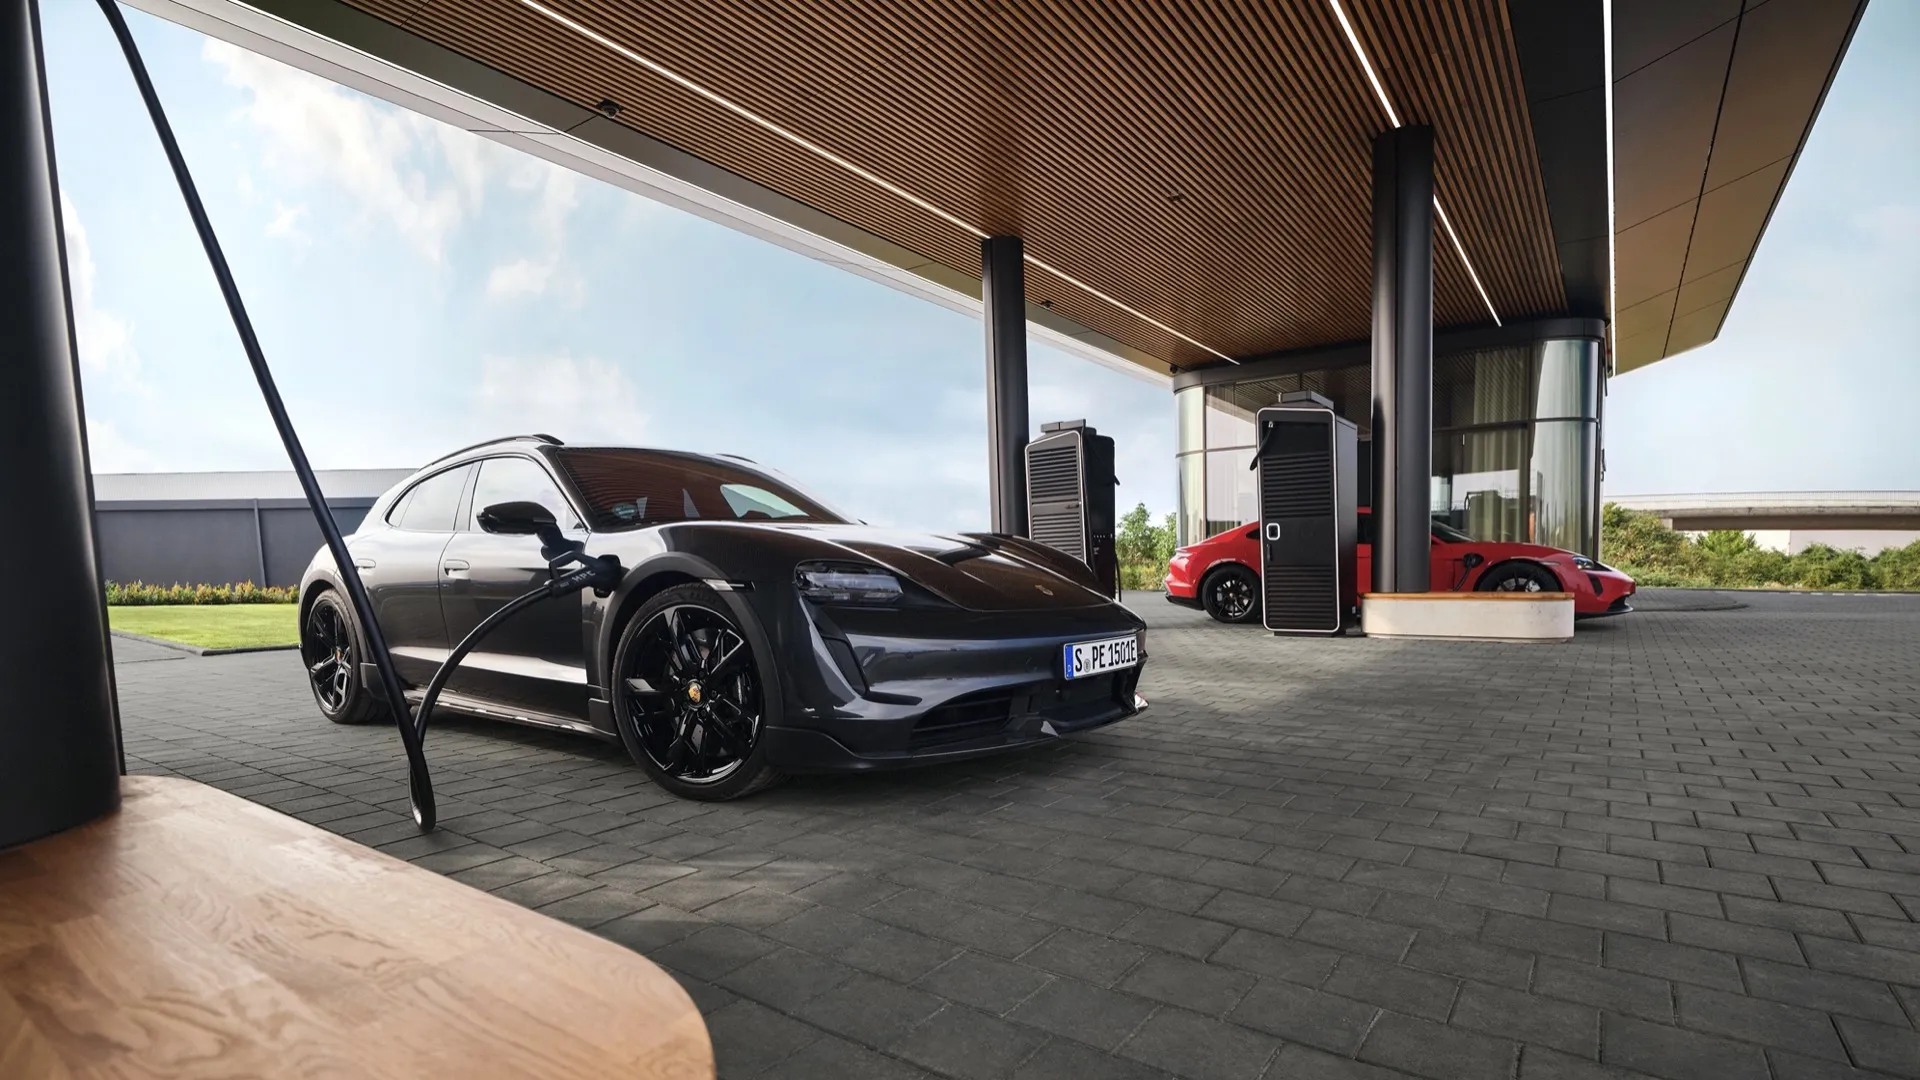 Porsche hints a future EV may utilize 400-kw fast-charging